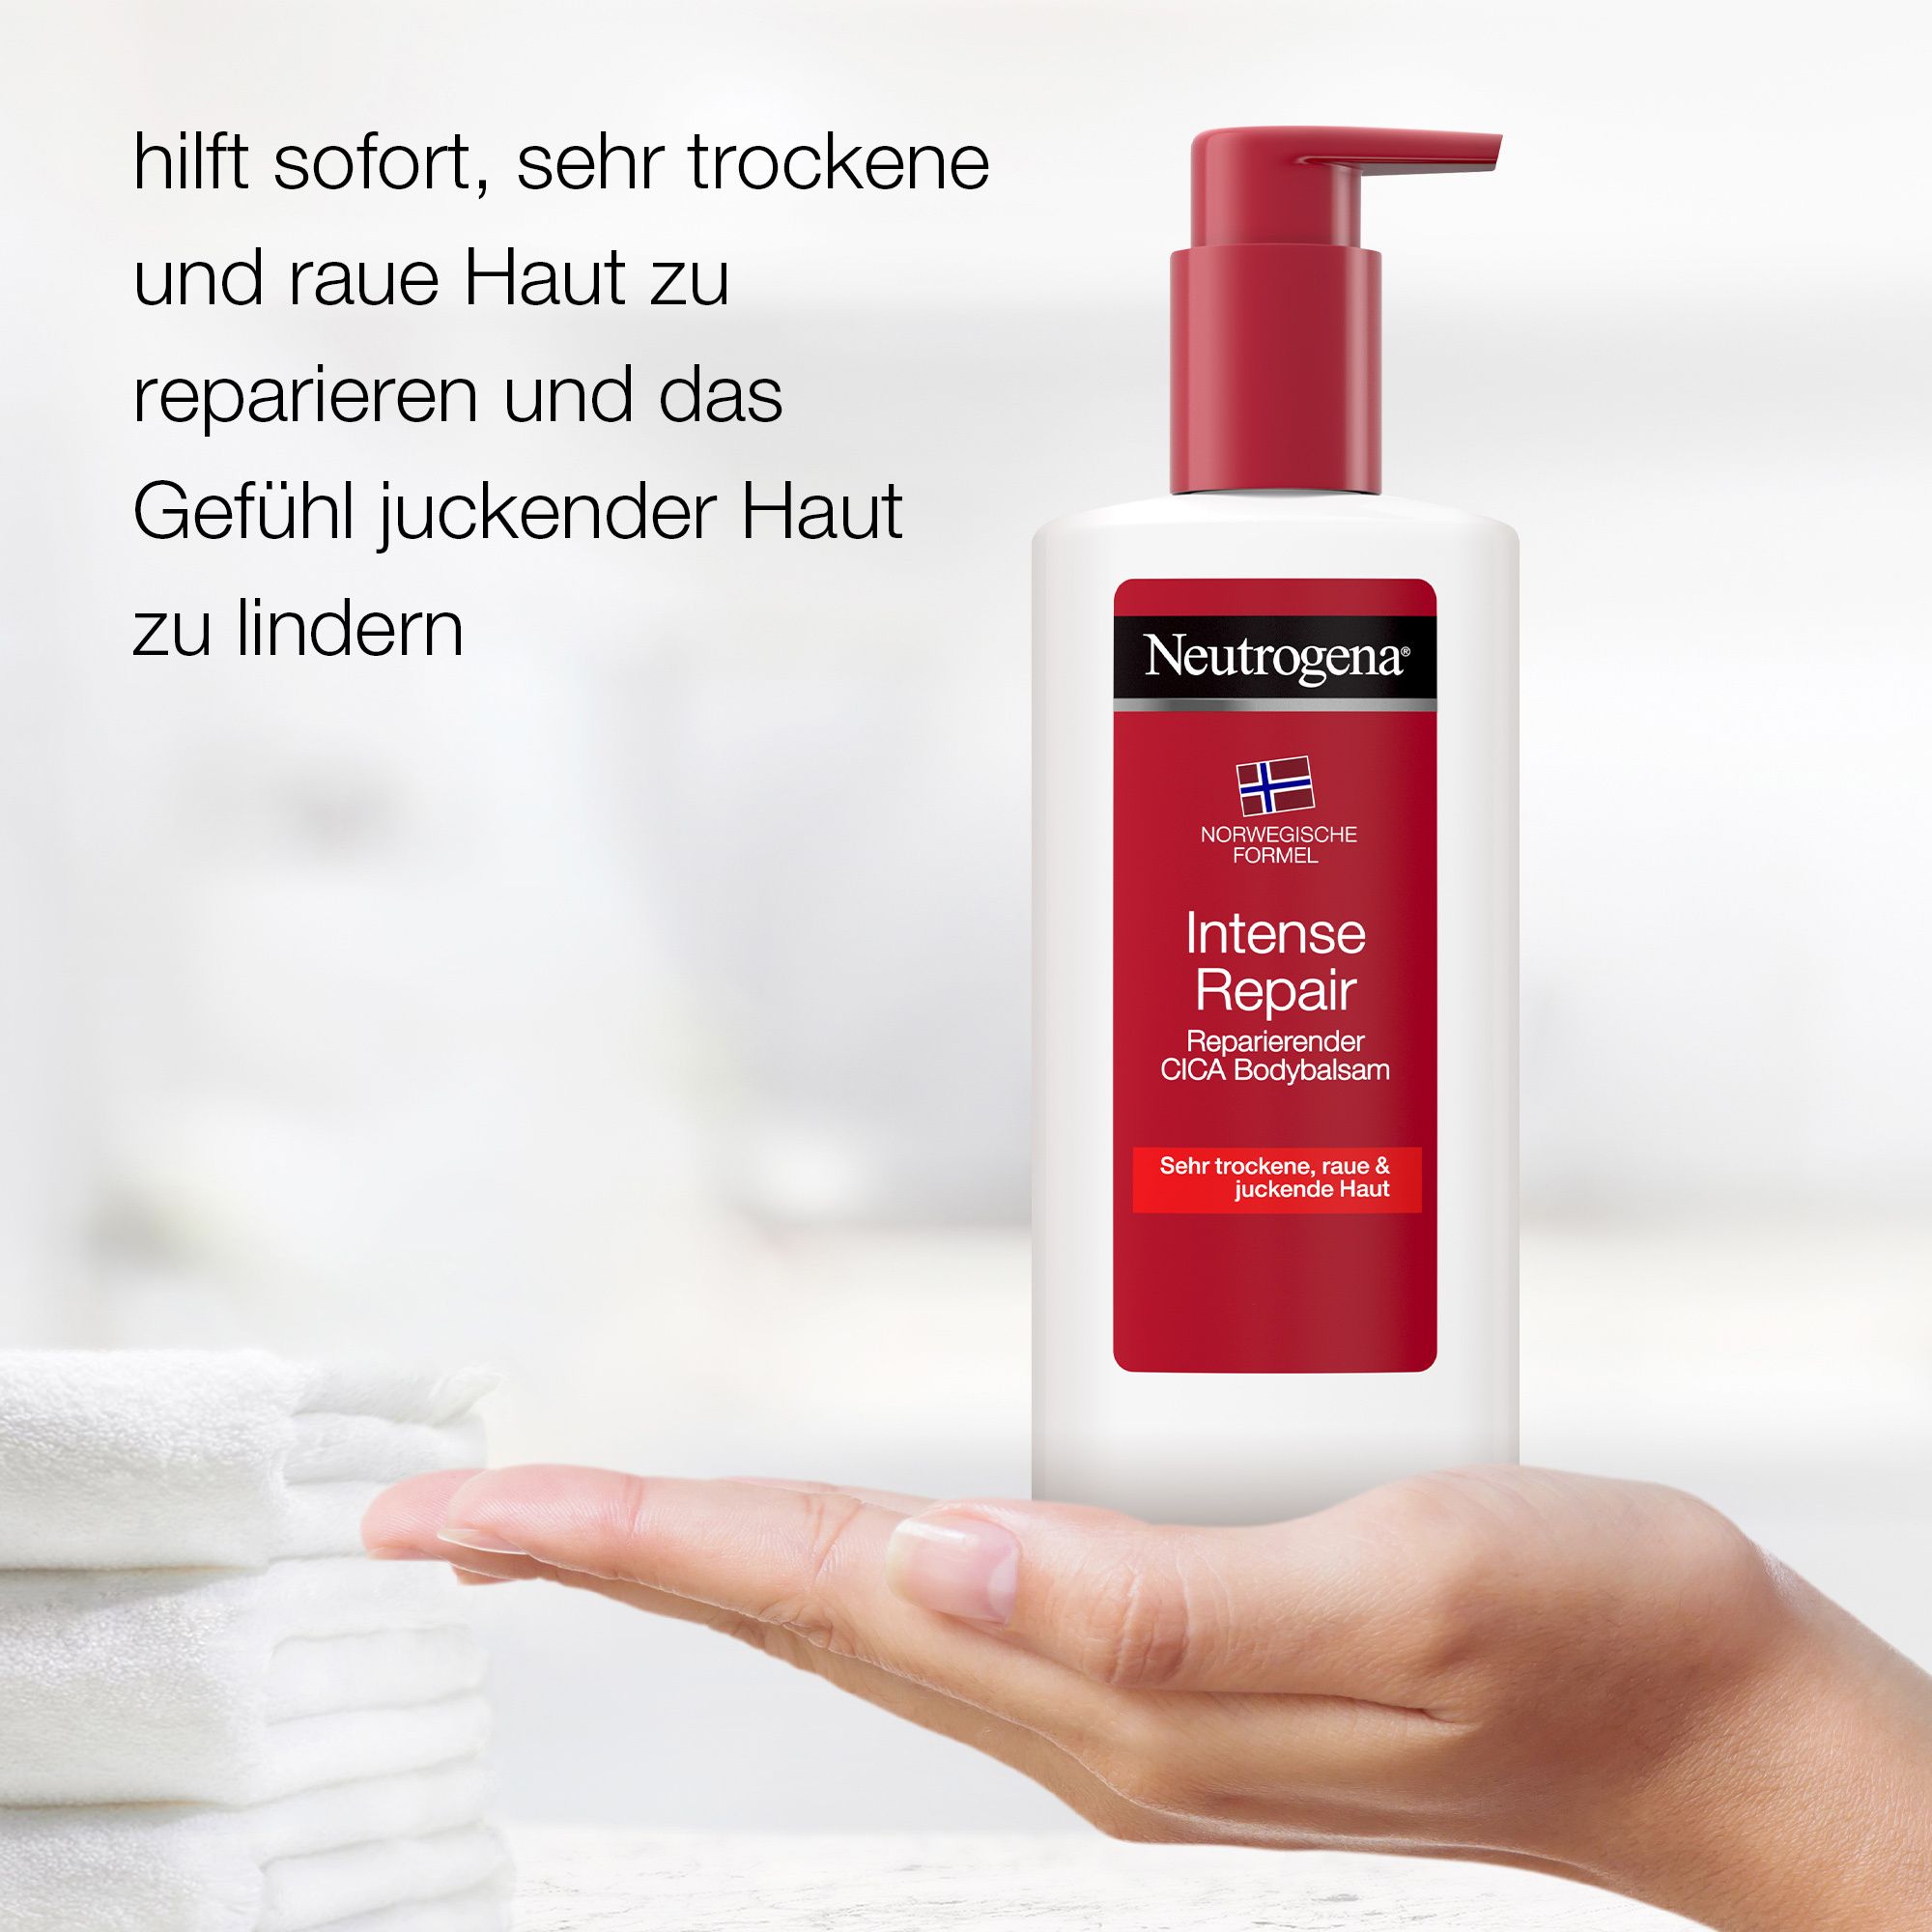 Neutrogena® Norwegische Formel Intense Repair Bodybalsam